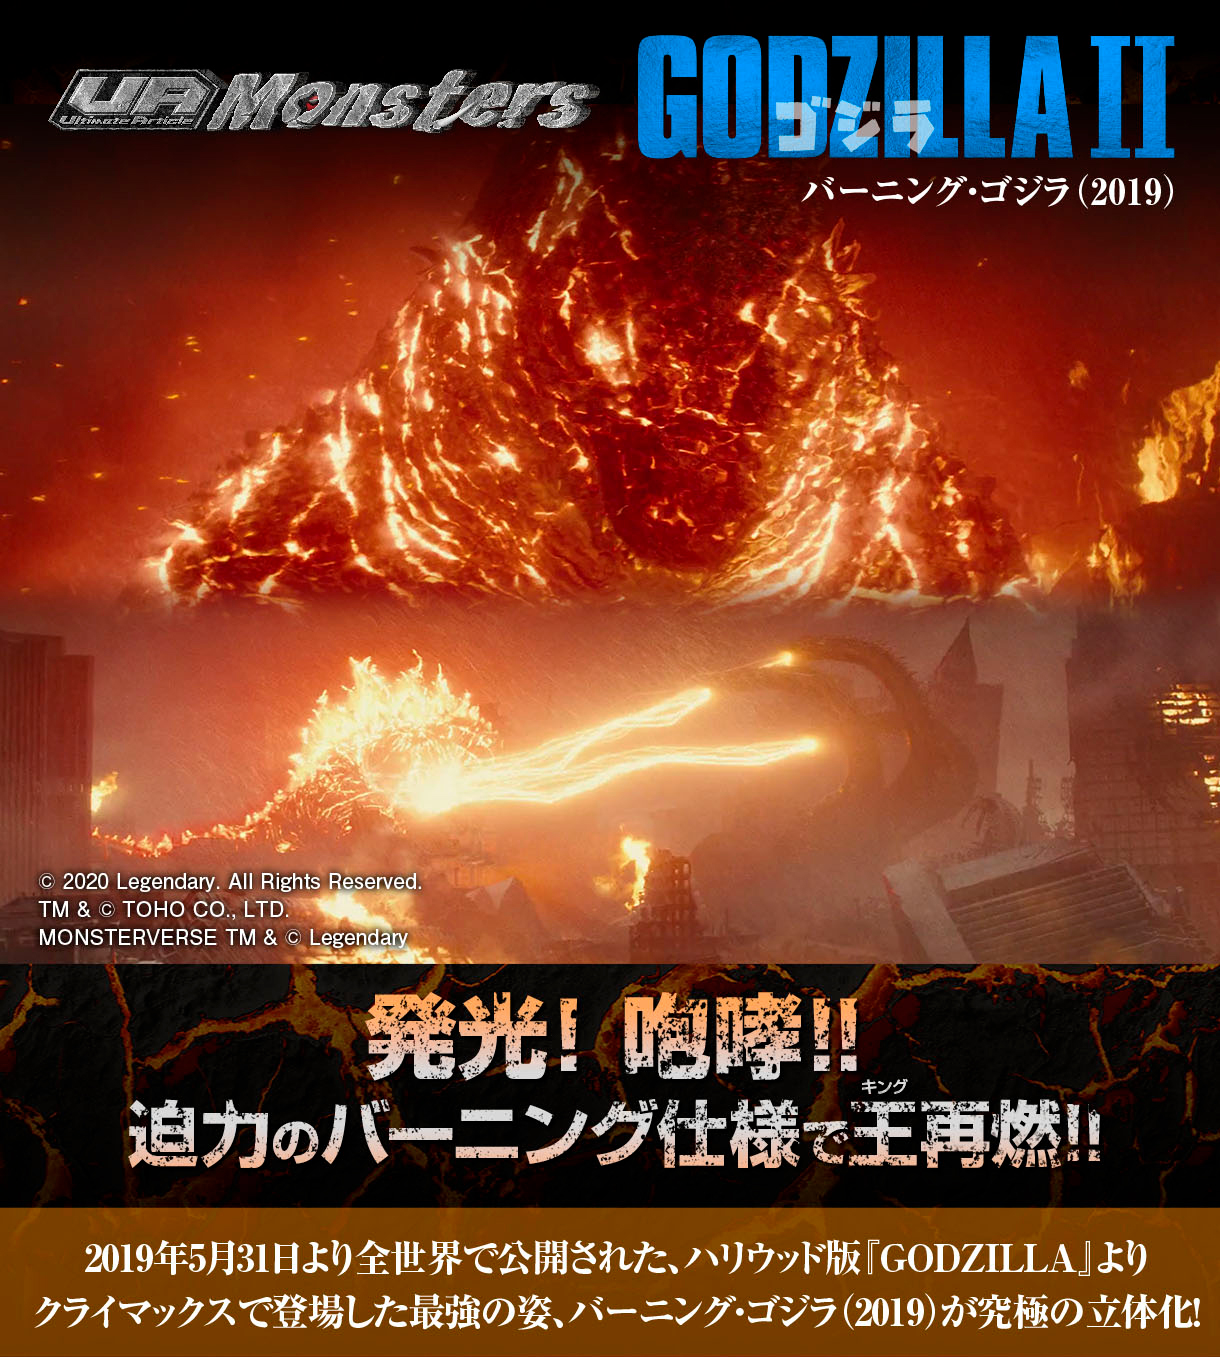 Ultimate Article UA Monsters バーニング・ゴジラ 2019 (GODZILLA Ⅱ)